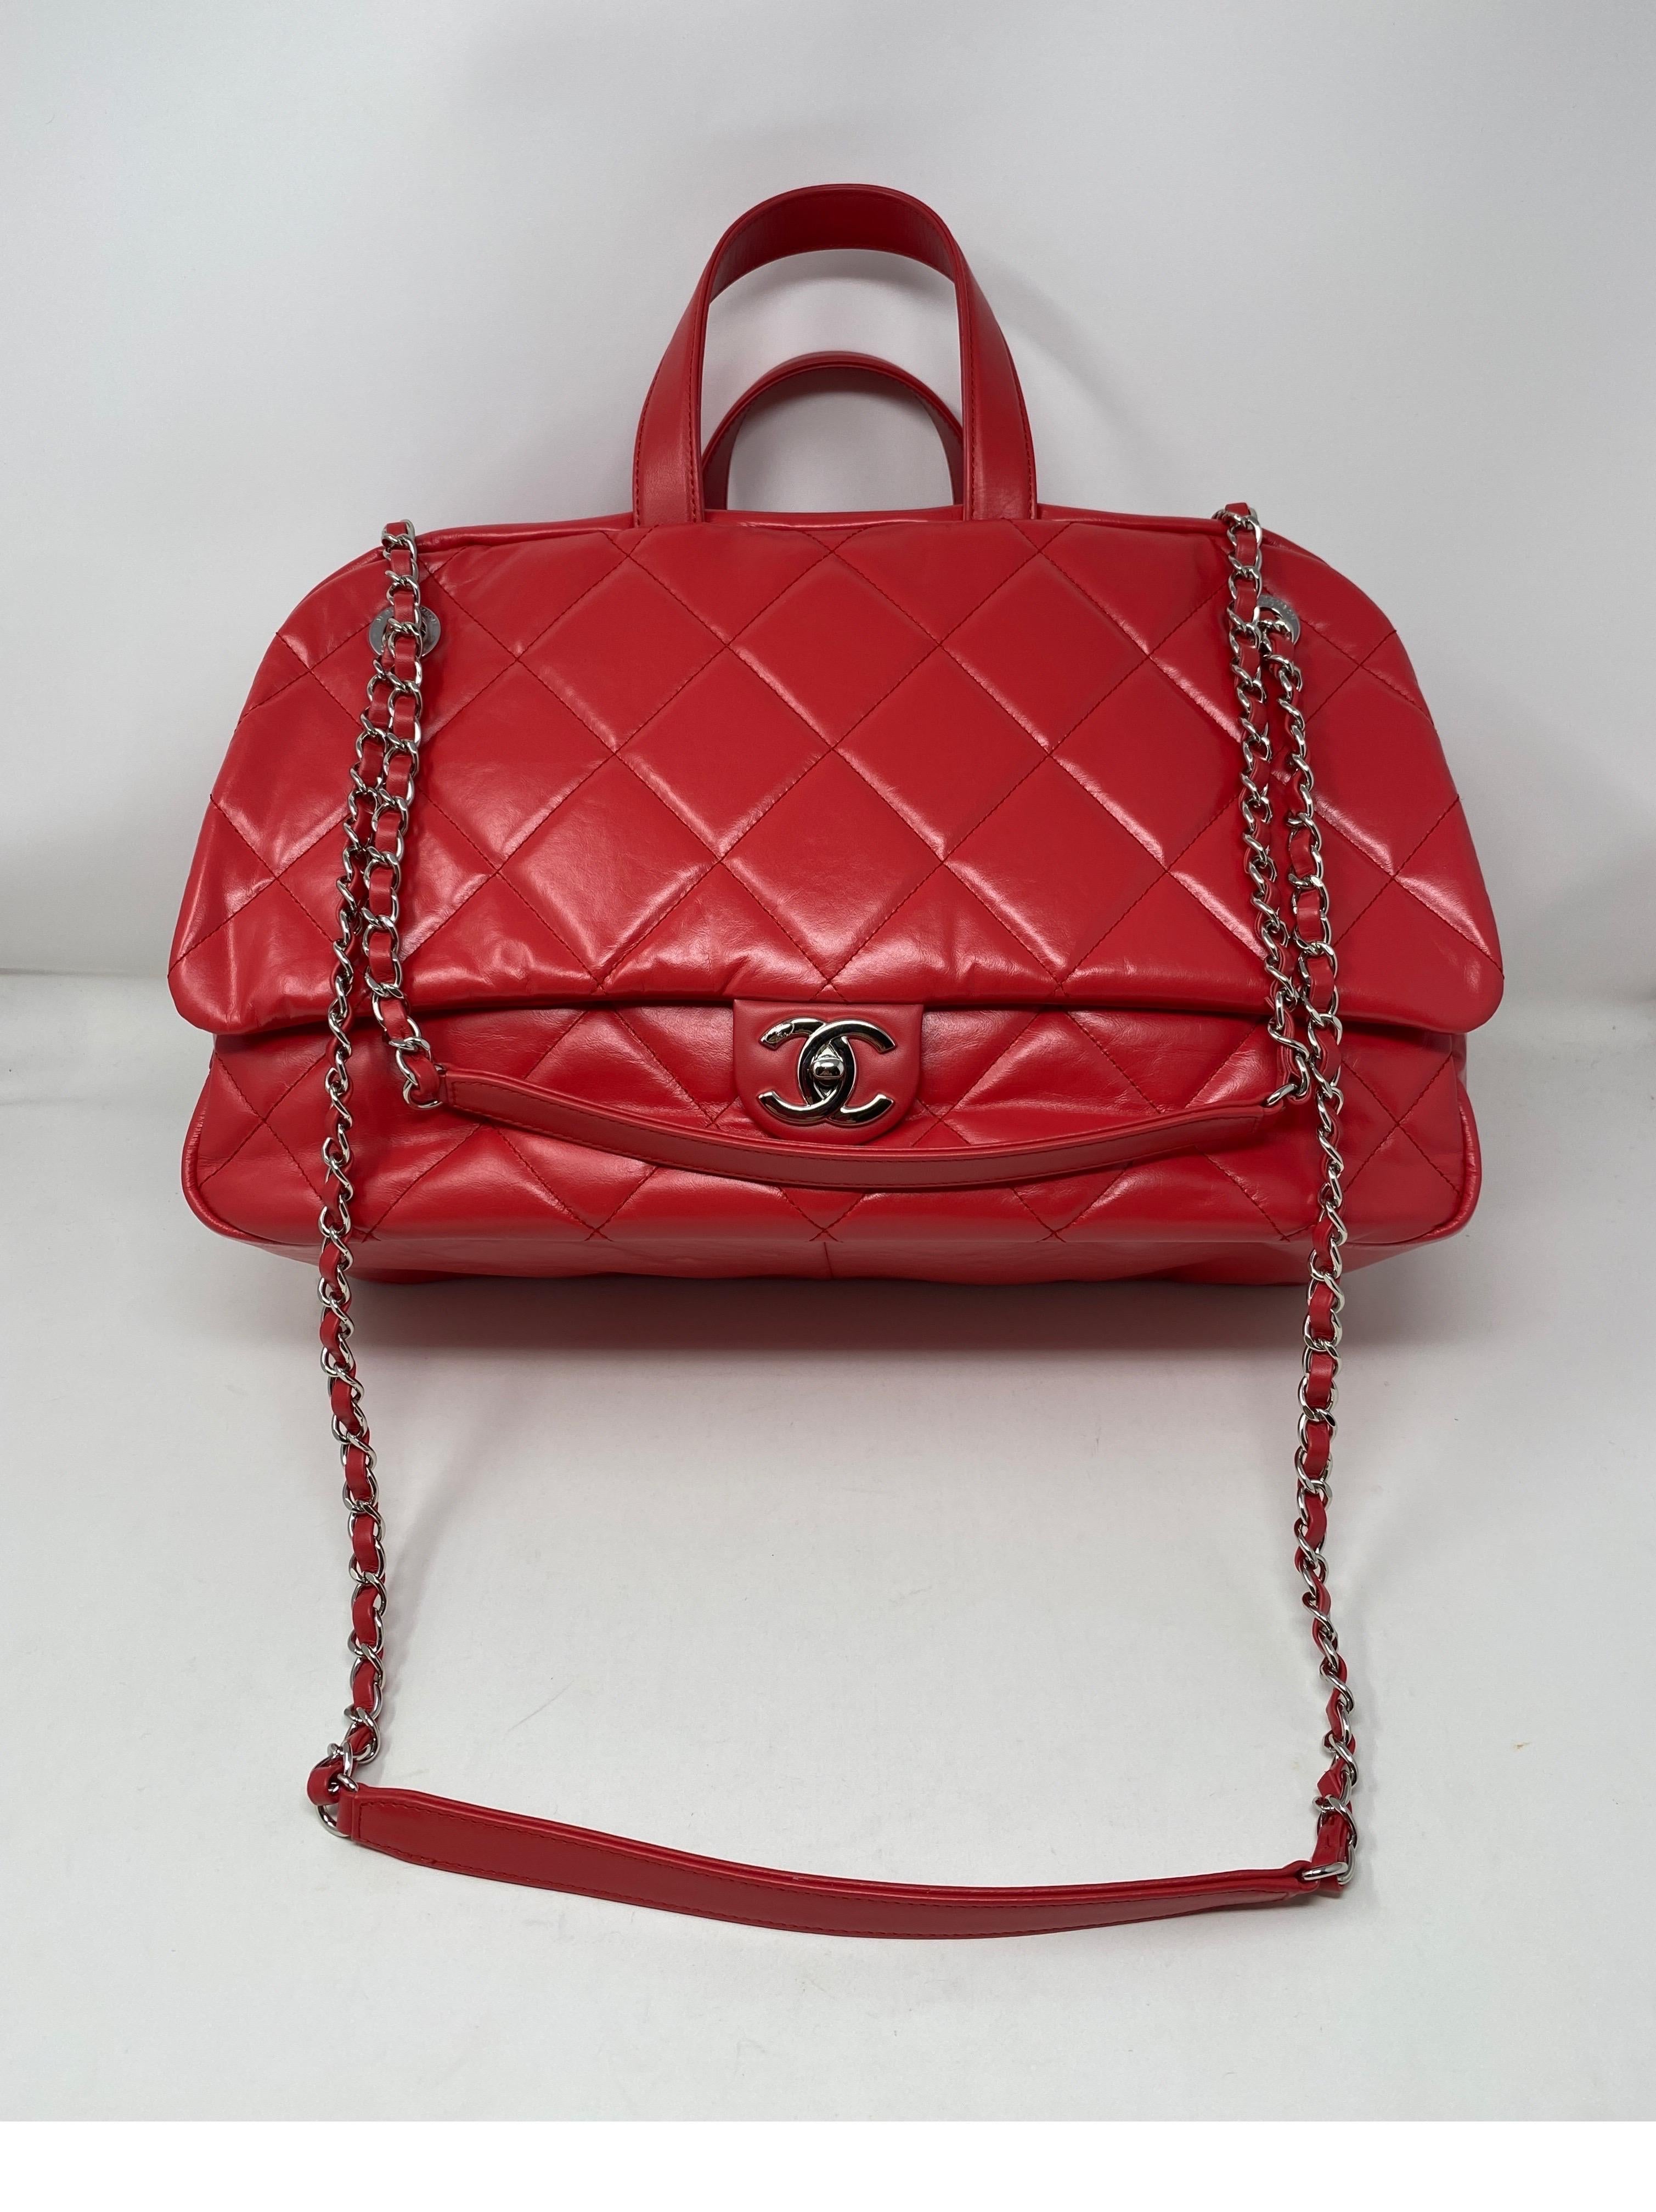 Chanel Large Red Bowler Bag  12